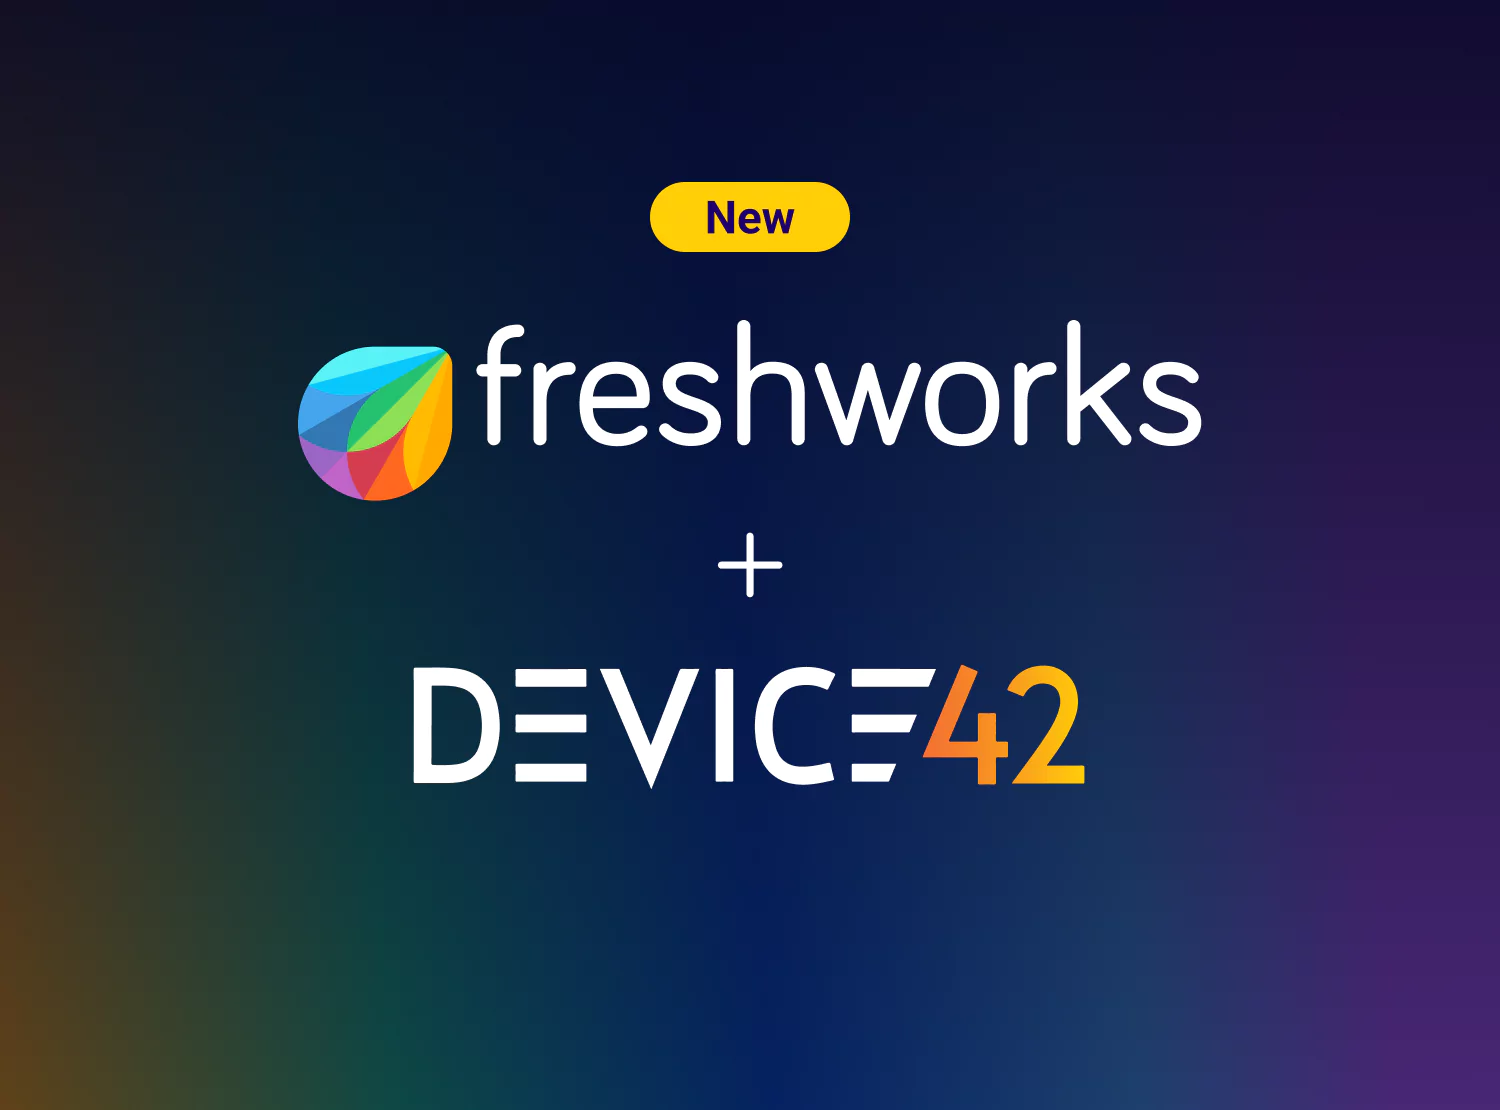 Freshworks + Device42